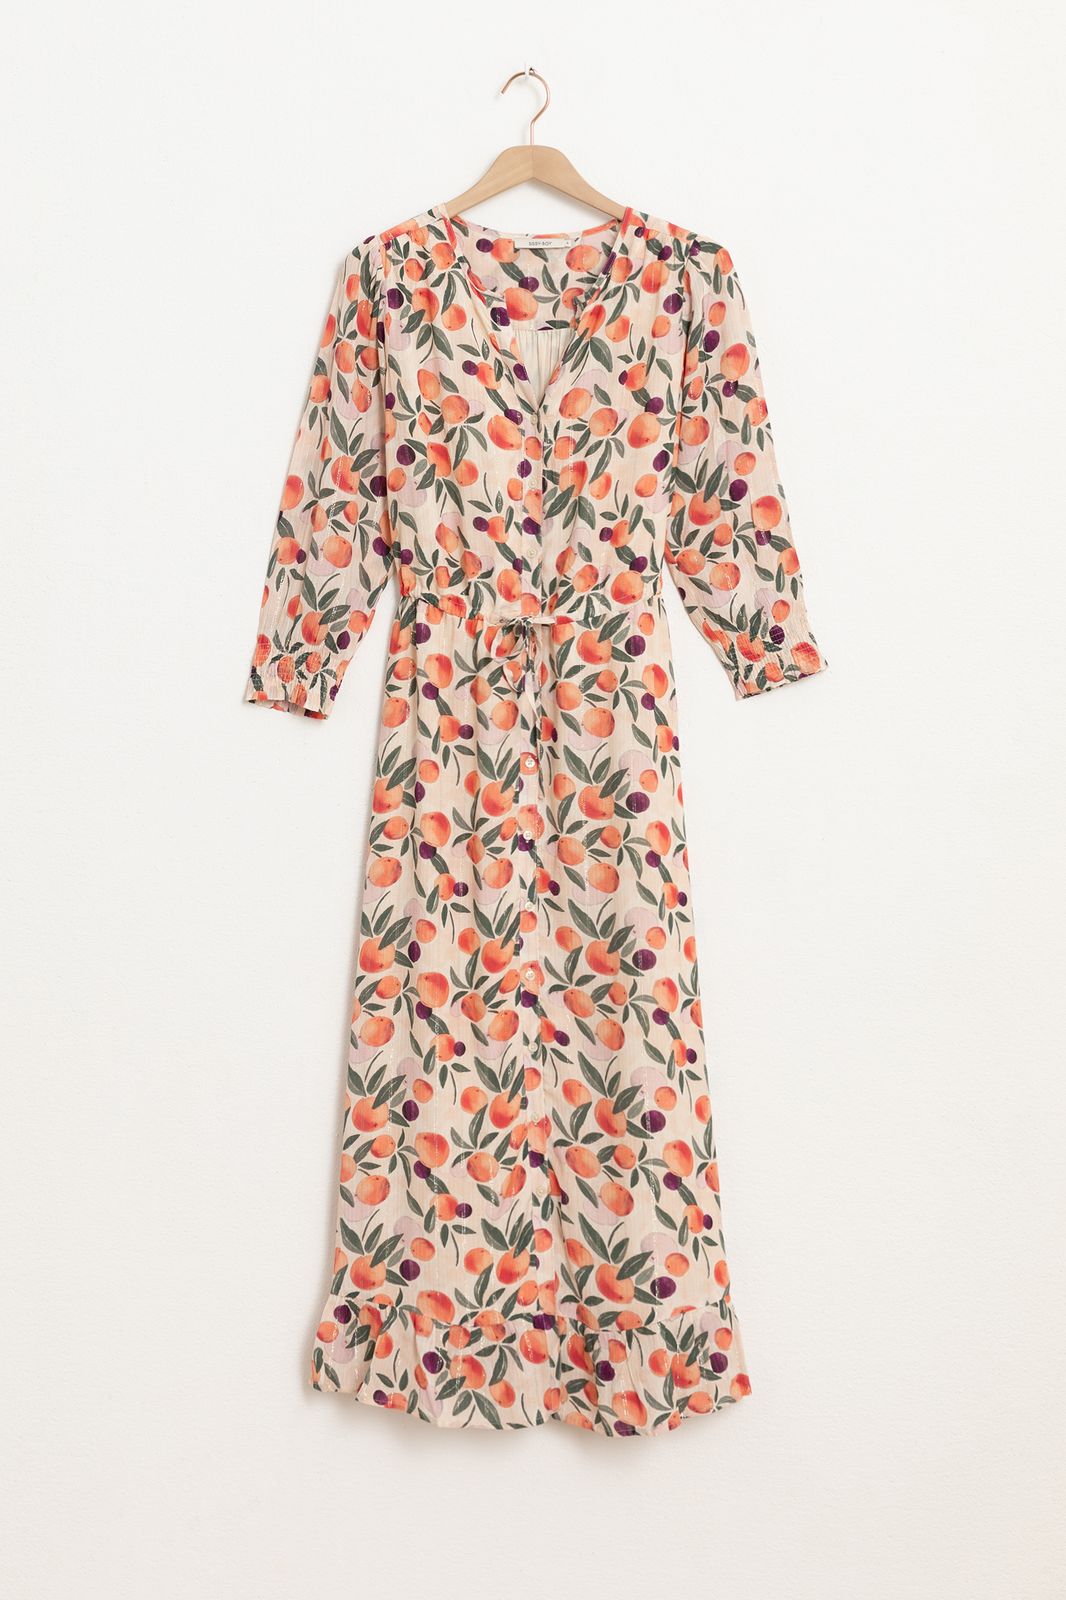 Robe portefeuille avec imprimé oranges et lurex - rose clair